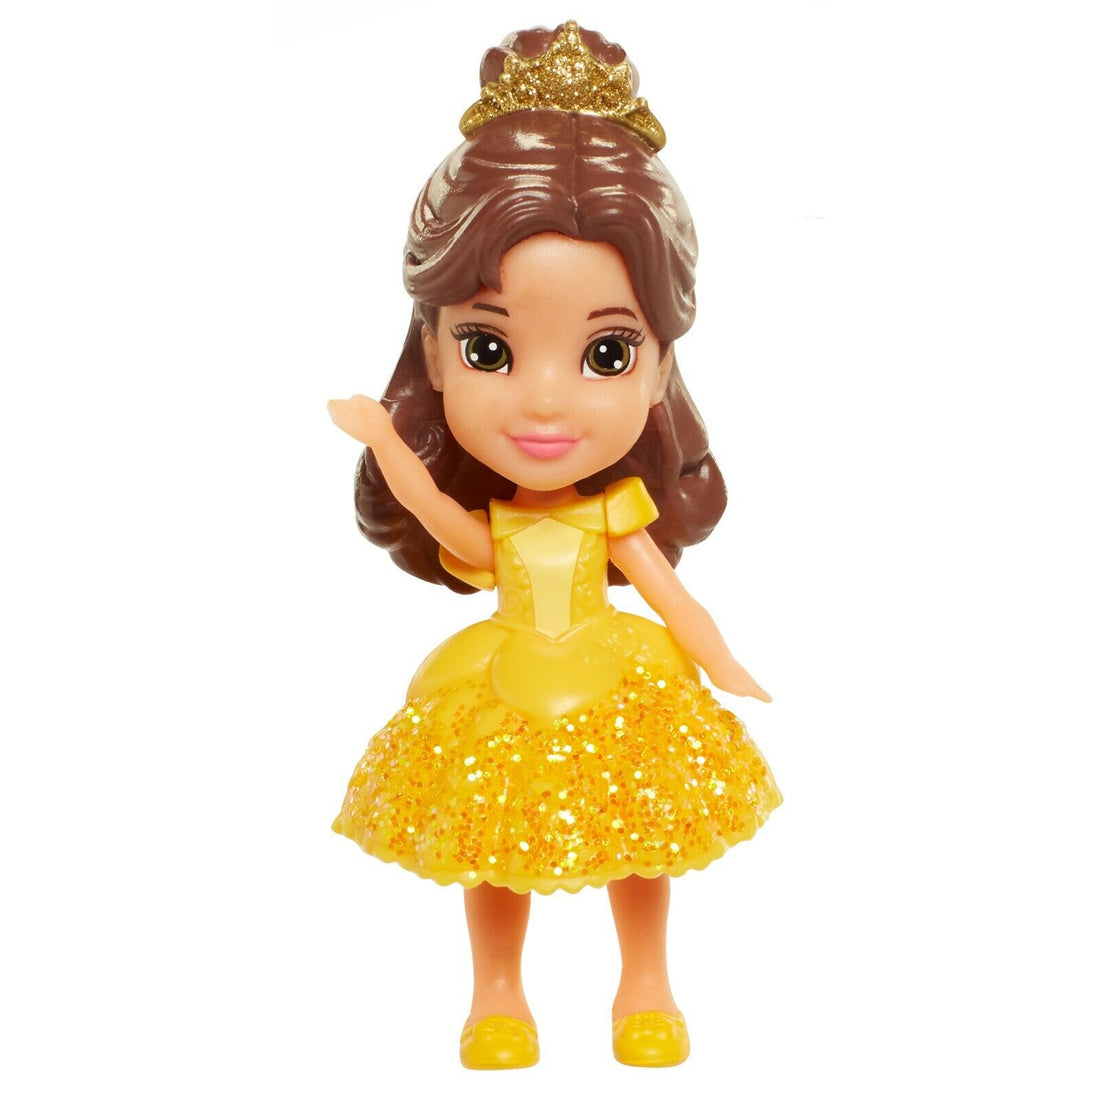 Disney Mini 3-Inch Toddler Dolls - Pick Your Favorite! - Belle